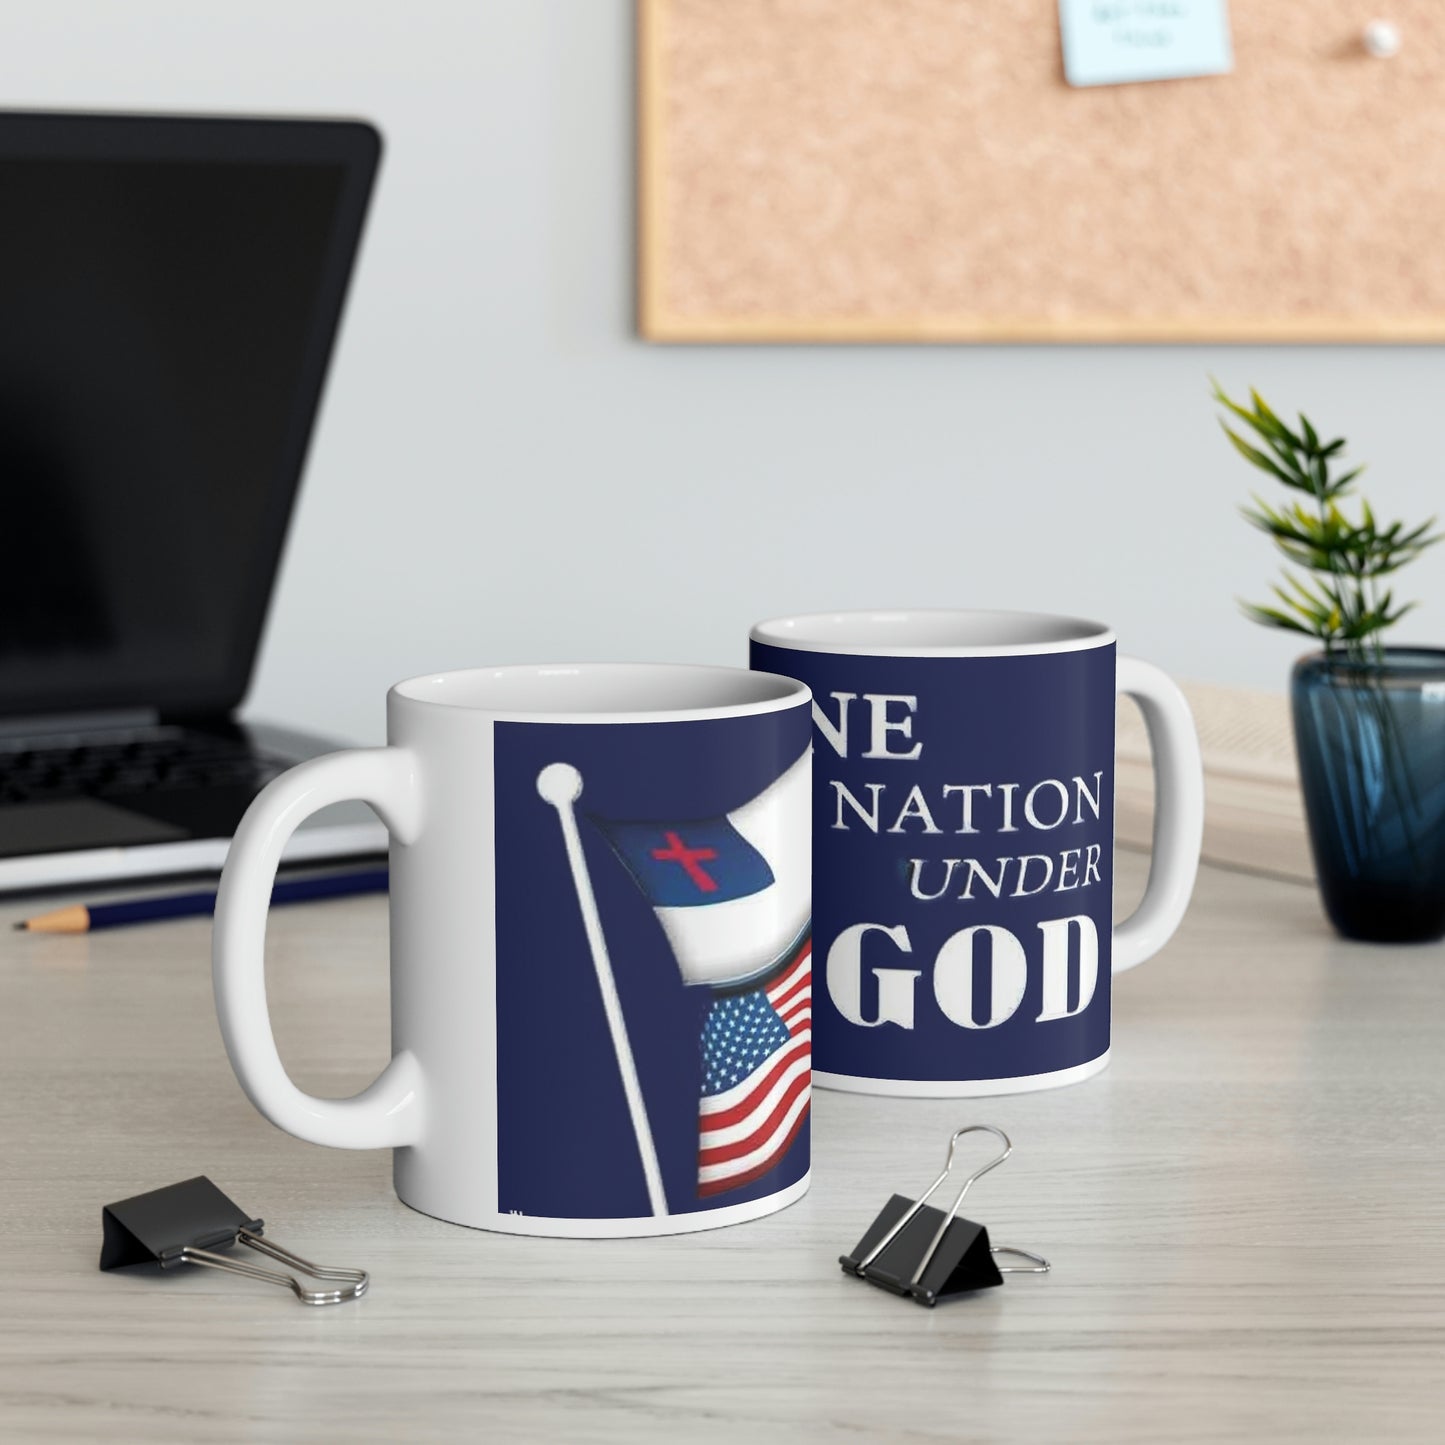 One Nation Under God Ceramic Mug 11oz